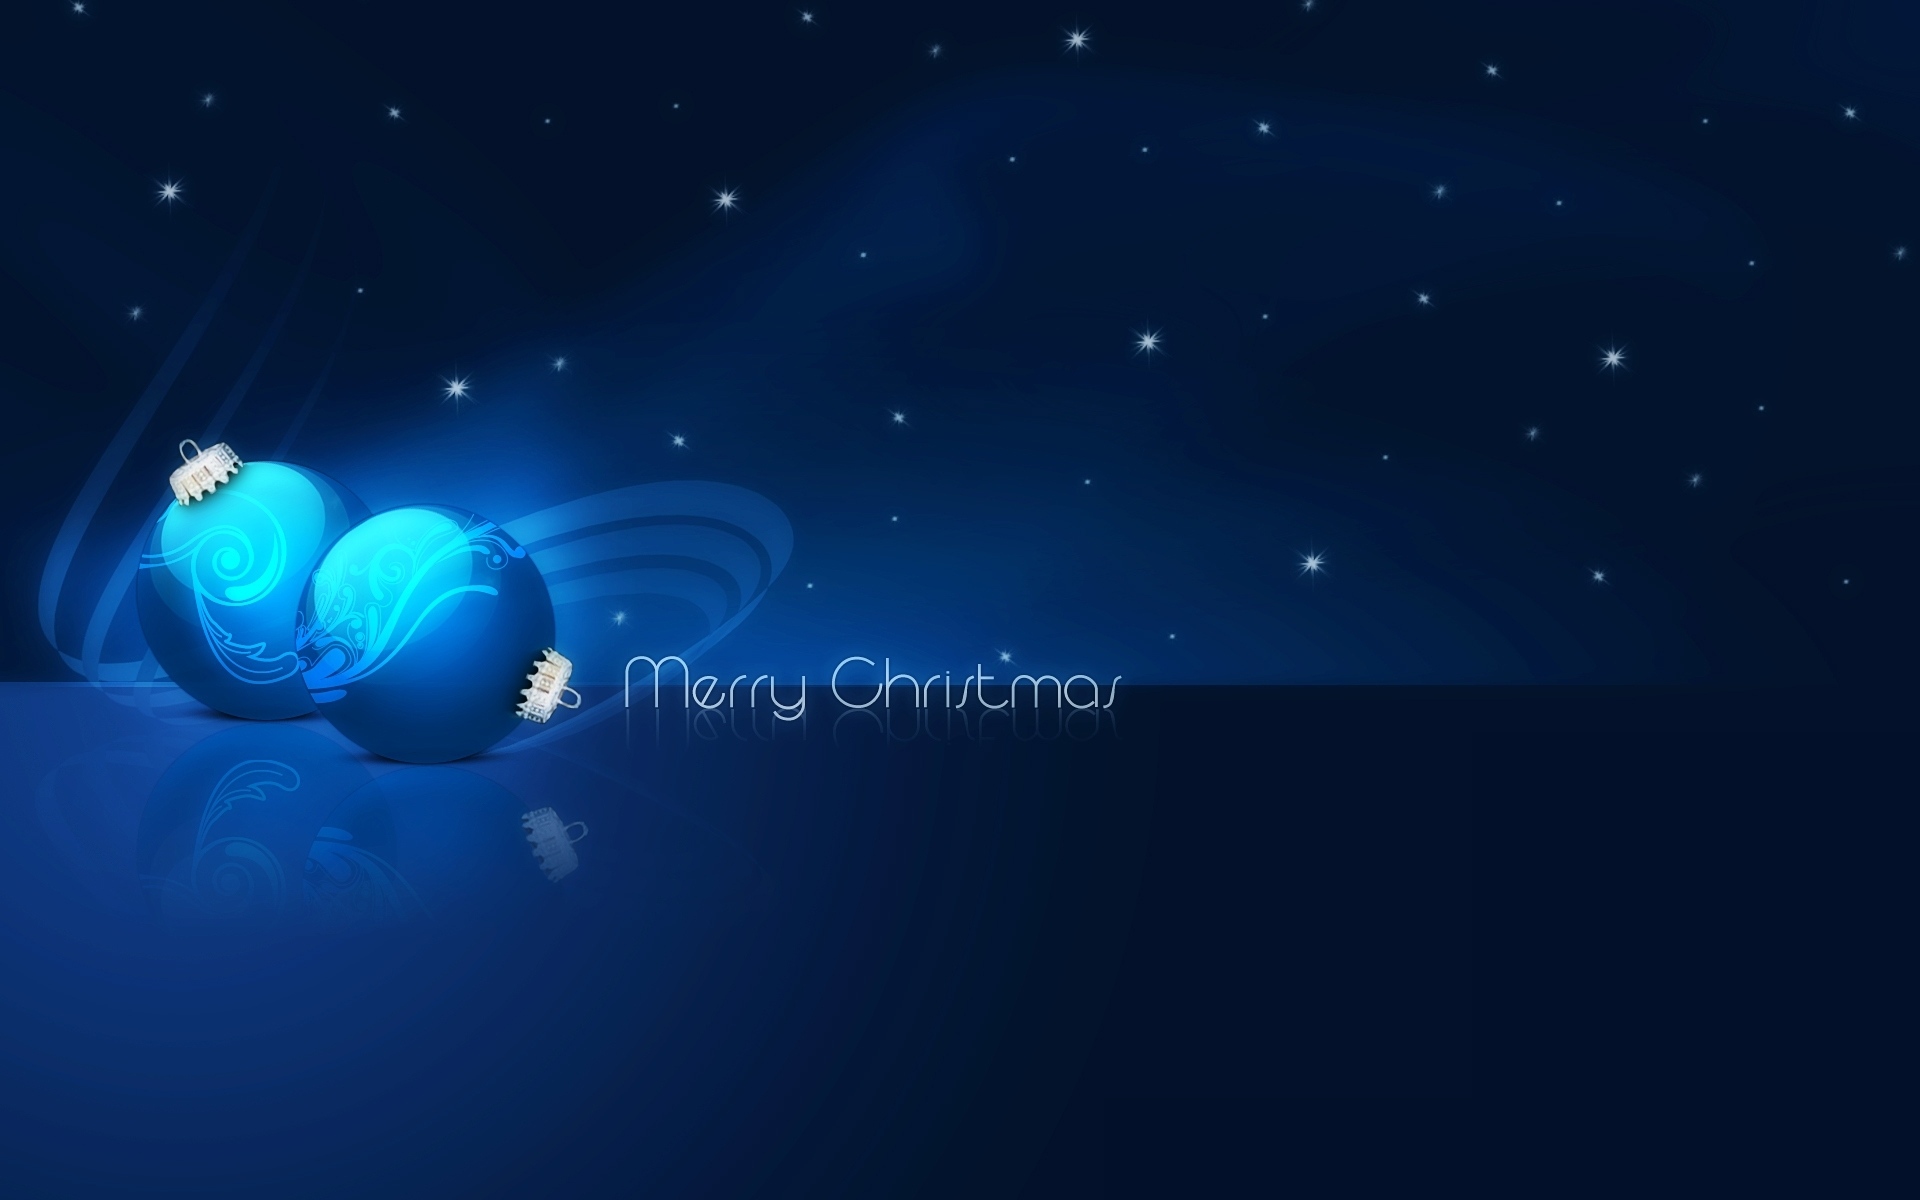 PCデスクトップに装飾, クリスマス, 青い, 出演者, ホリデー, メリークリスマス, ミニマリスト画像を無料でダウンロード